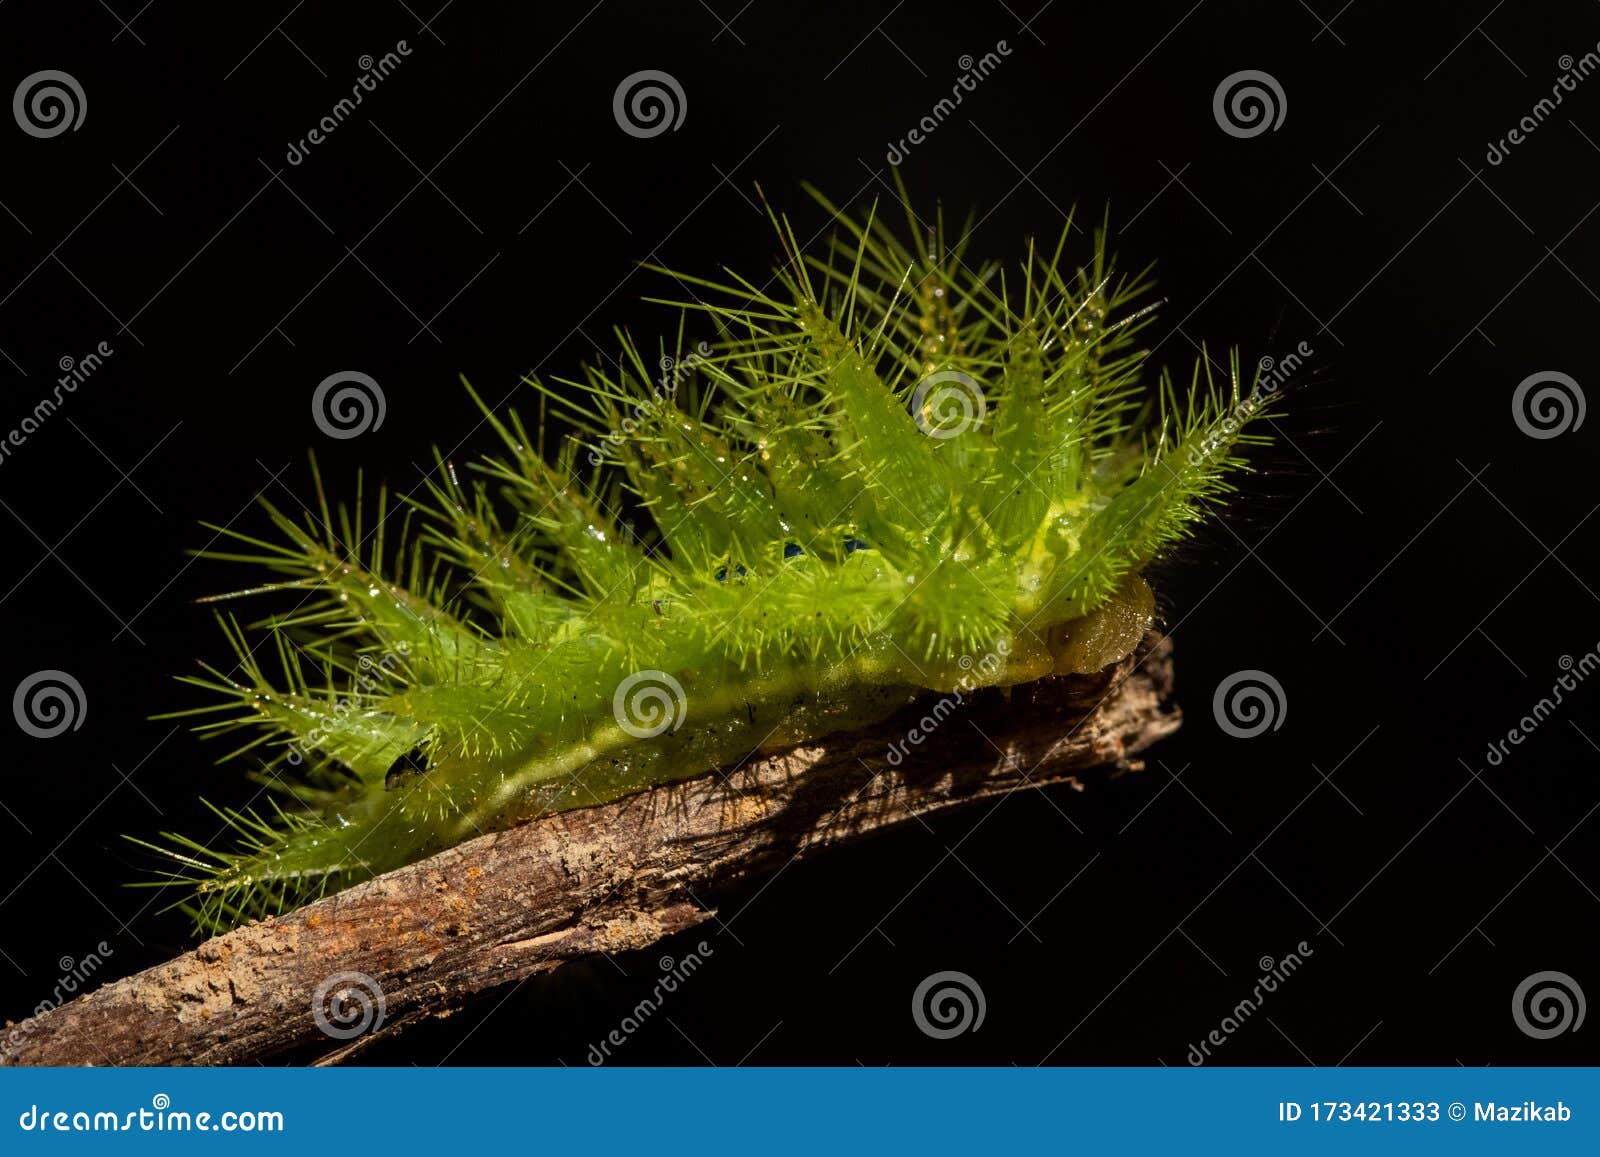 Nettle Caterpillar stock image. Image of green, butterfly - 173421333